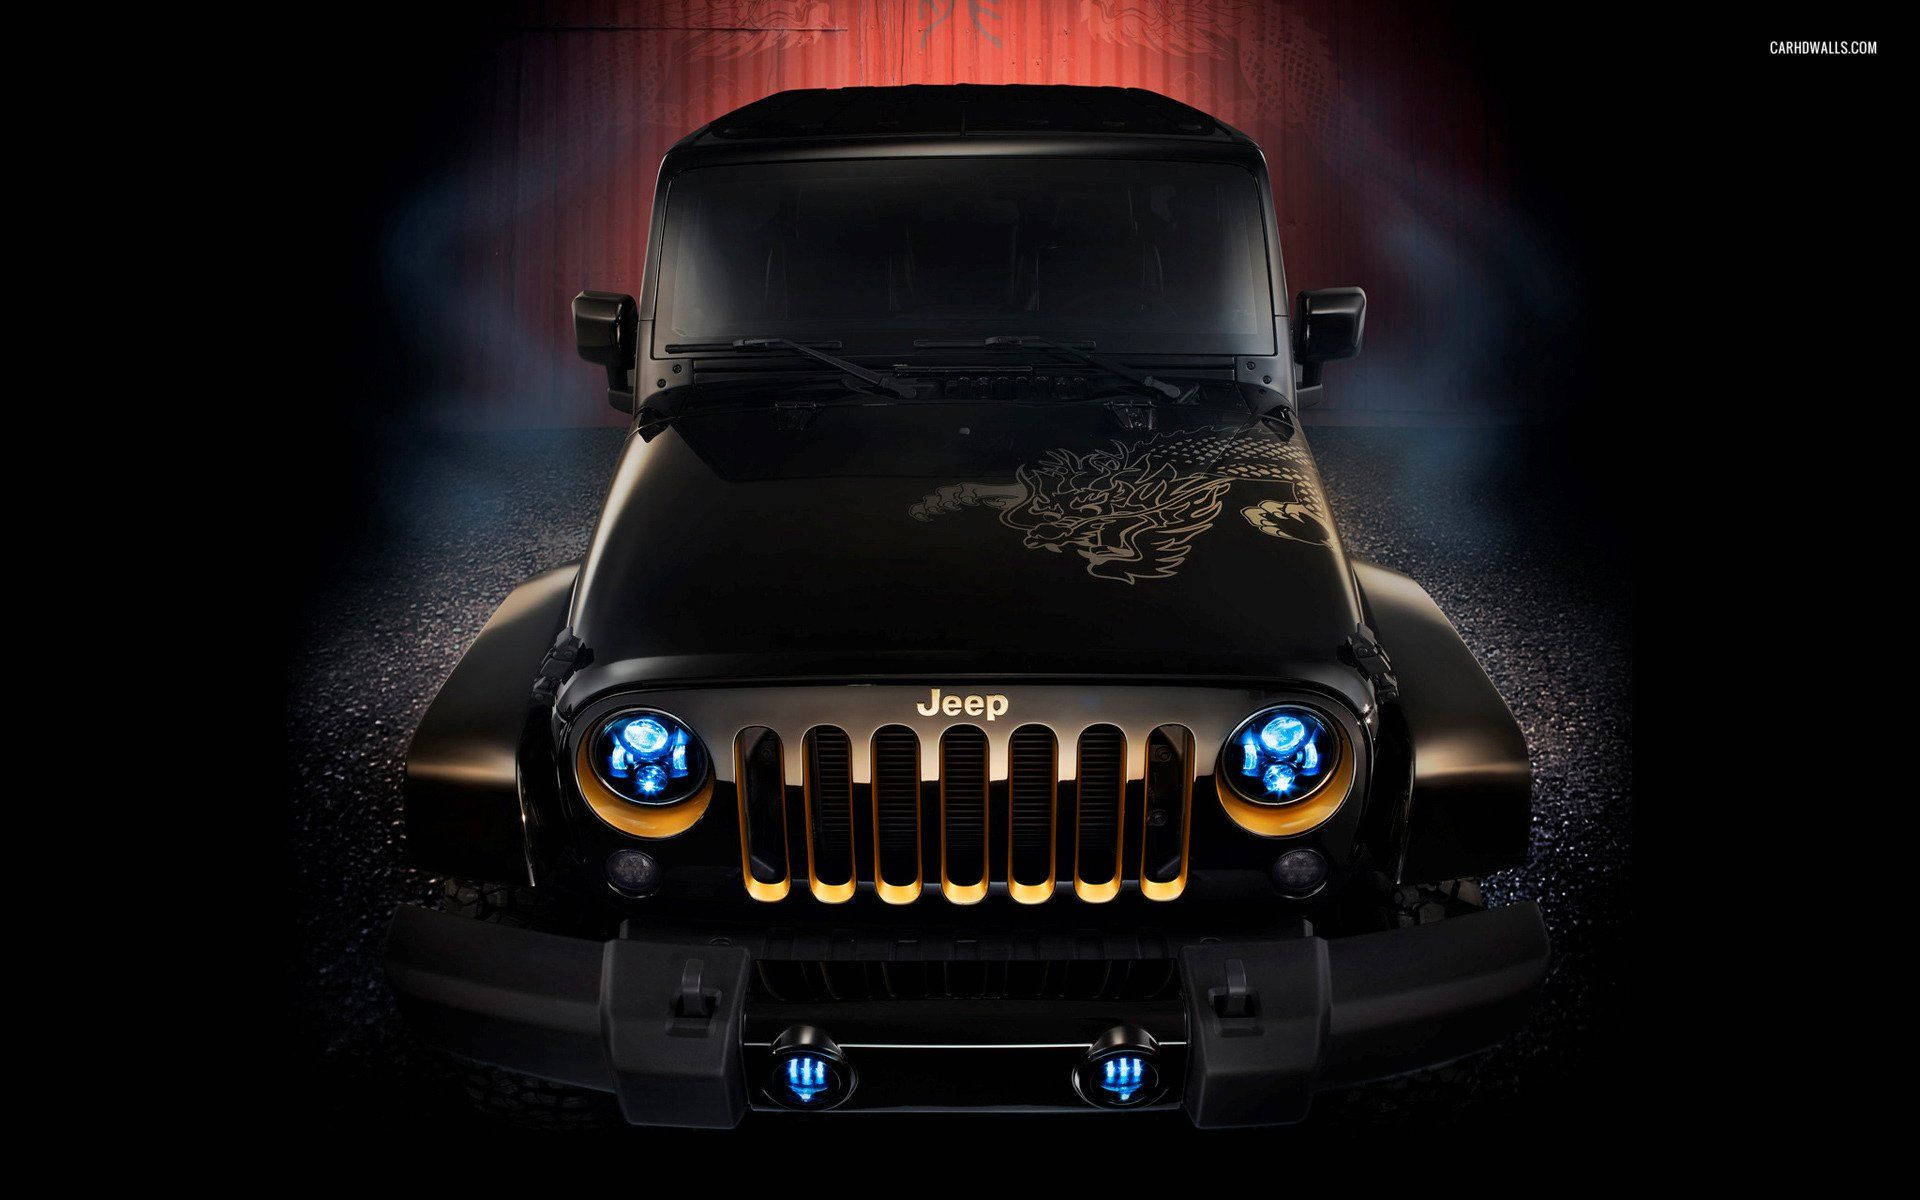 Shiny Black Jeep Picture